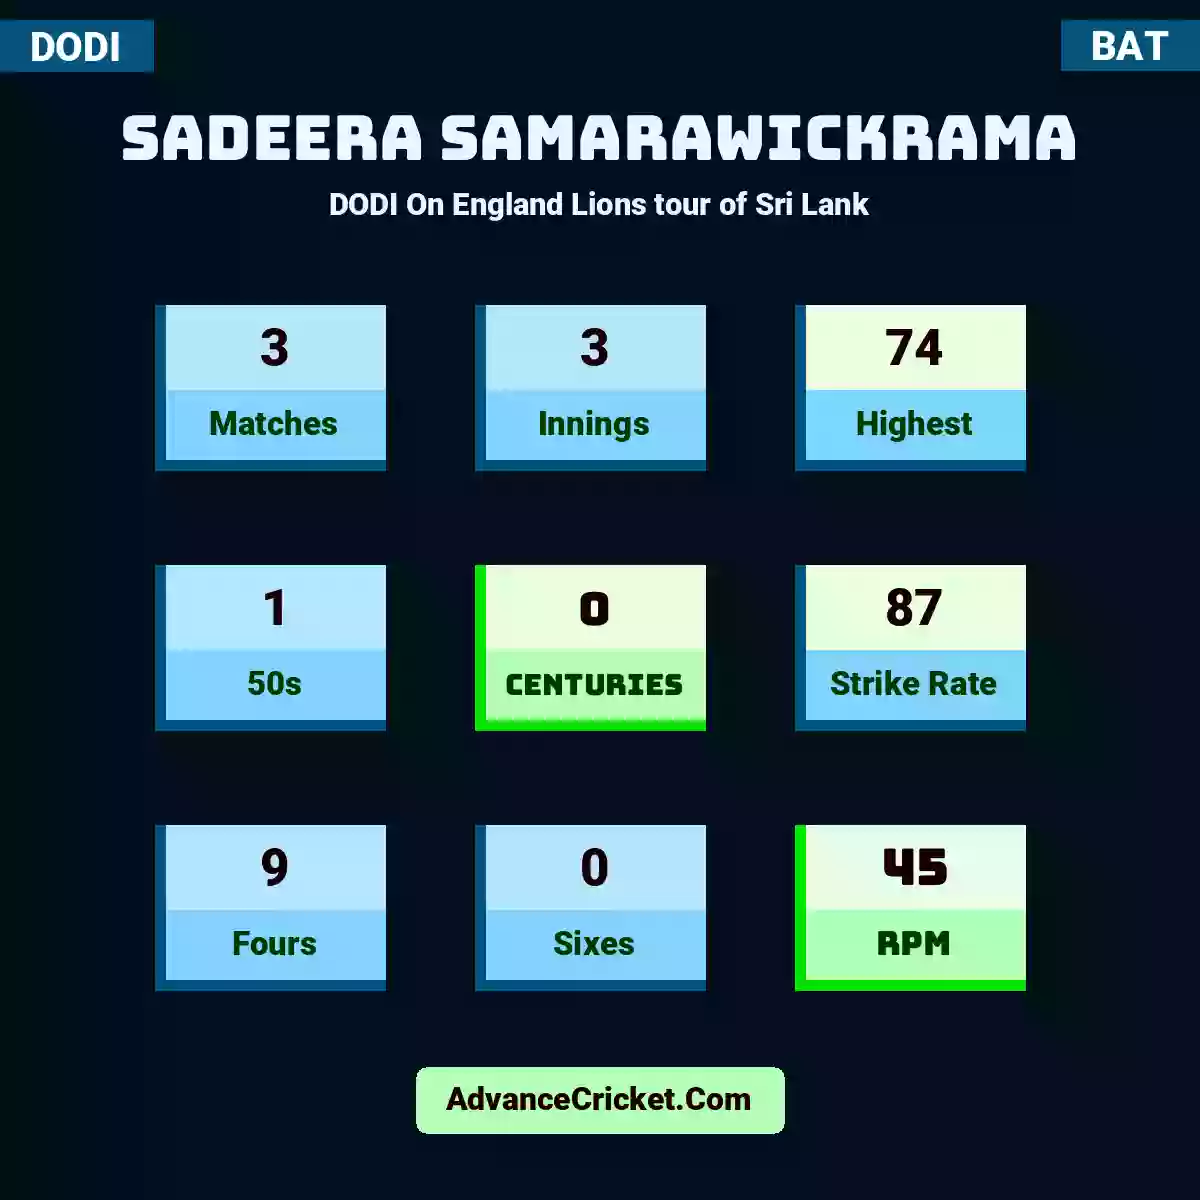 Sadeera Samarawickrama DODI  On England Lions tour of Sri Lank, Sadeera Samarawickrama played 3 matches, scored 74 runs as highest, 1 half-centuries, and 0 centuries, with a strike rate of 87. S.Samarawickrama hit 9 fours and 0 sixes, with an RPM of 45.